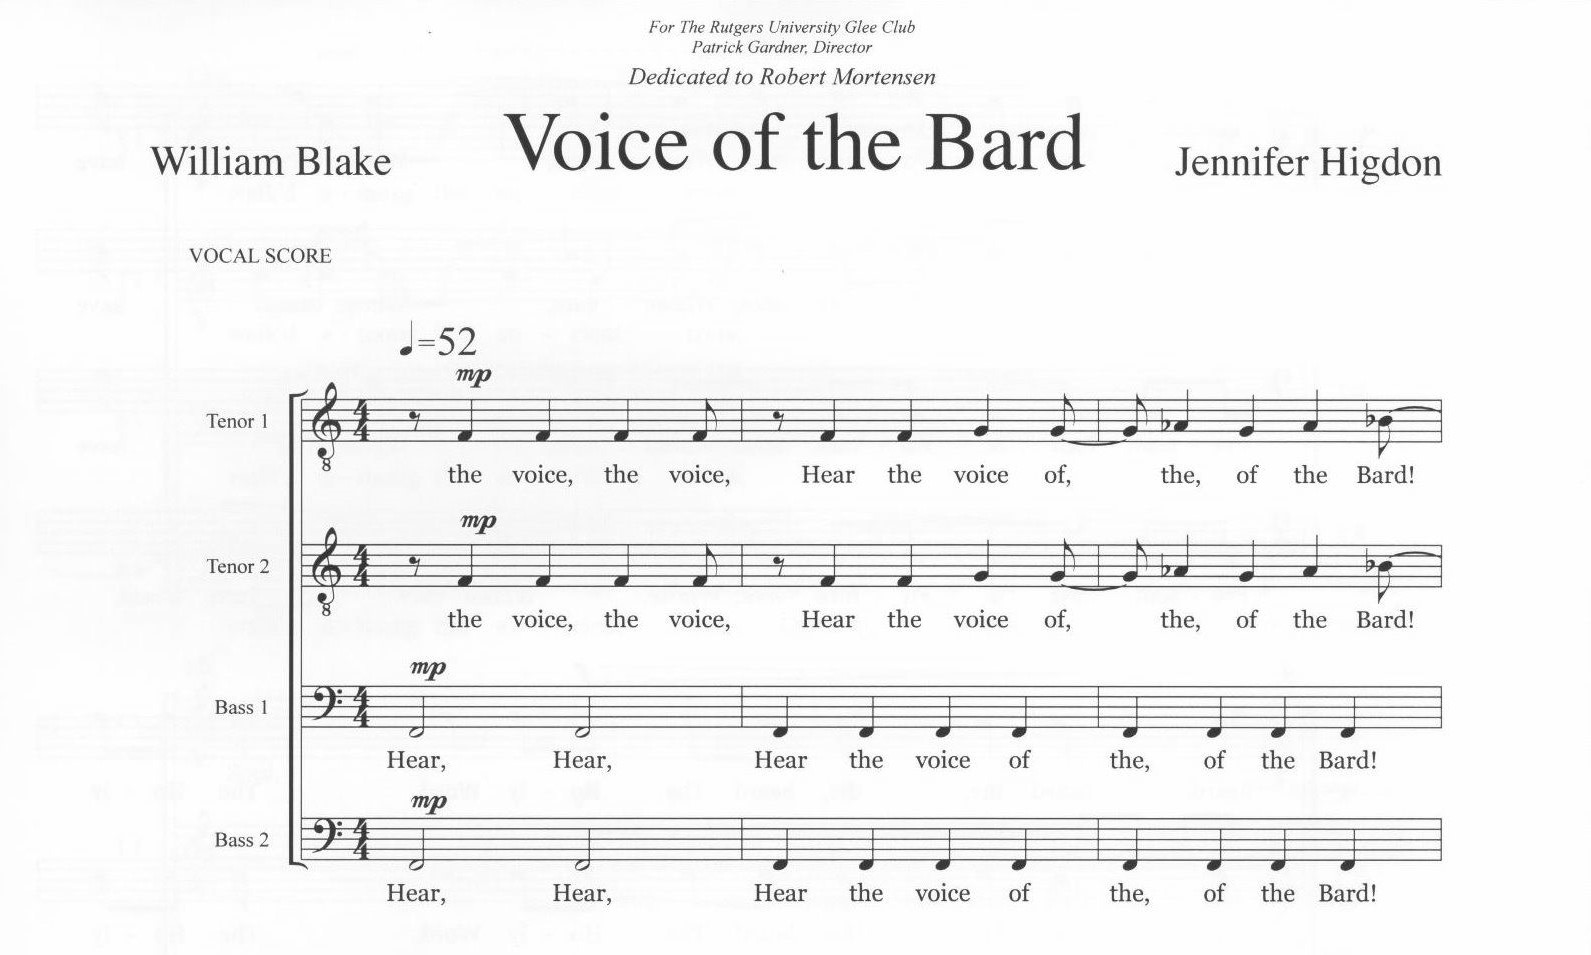 Voice of the Bard - Jennifer Higdon